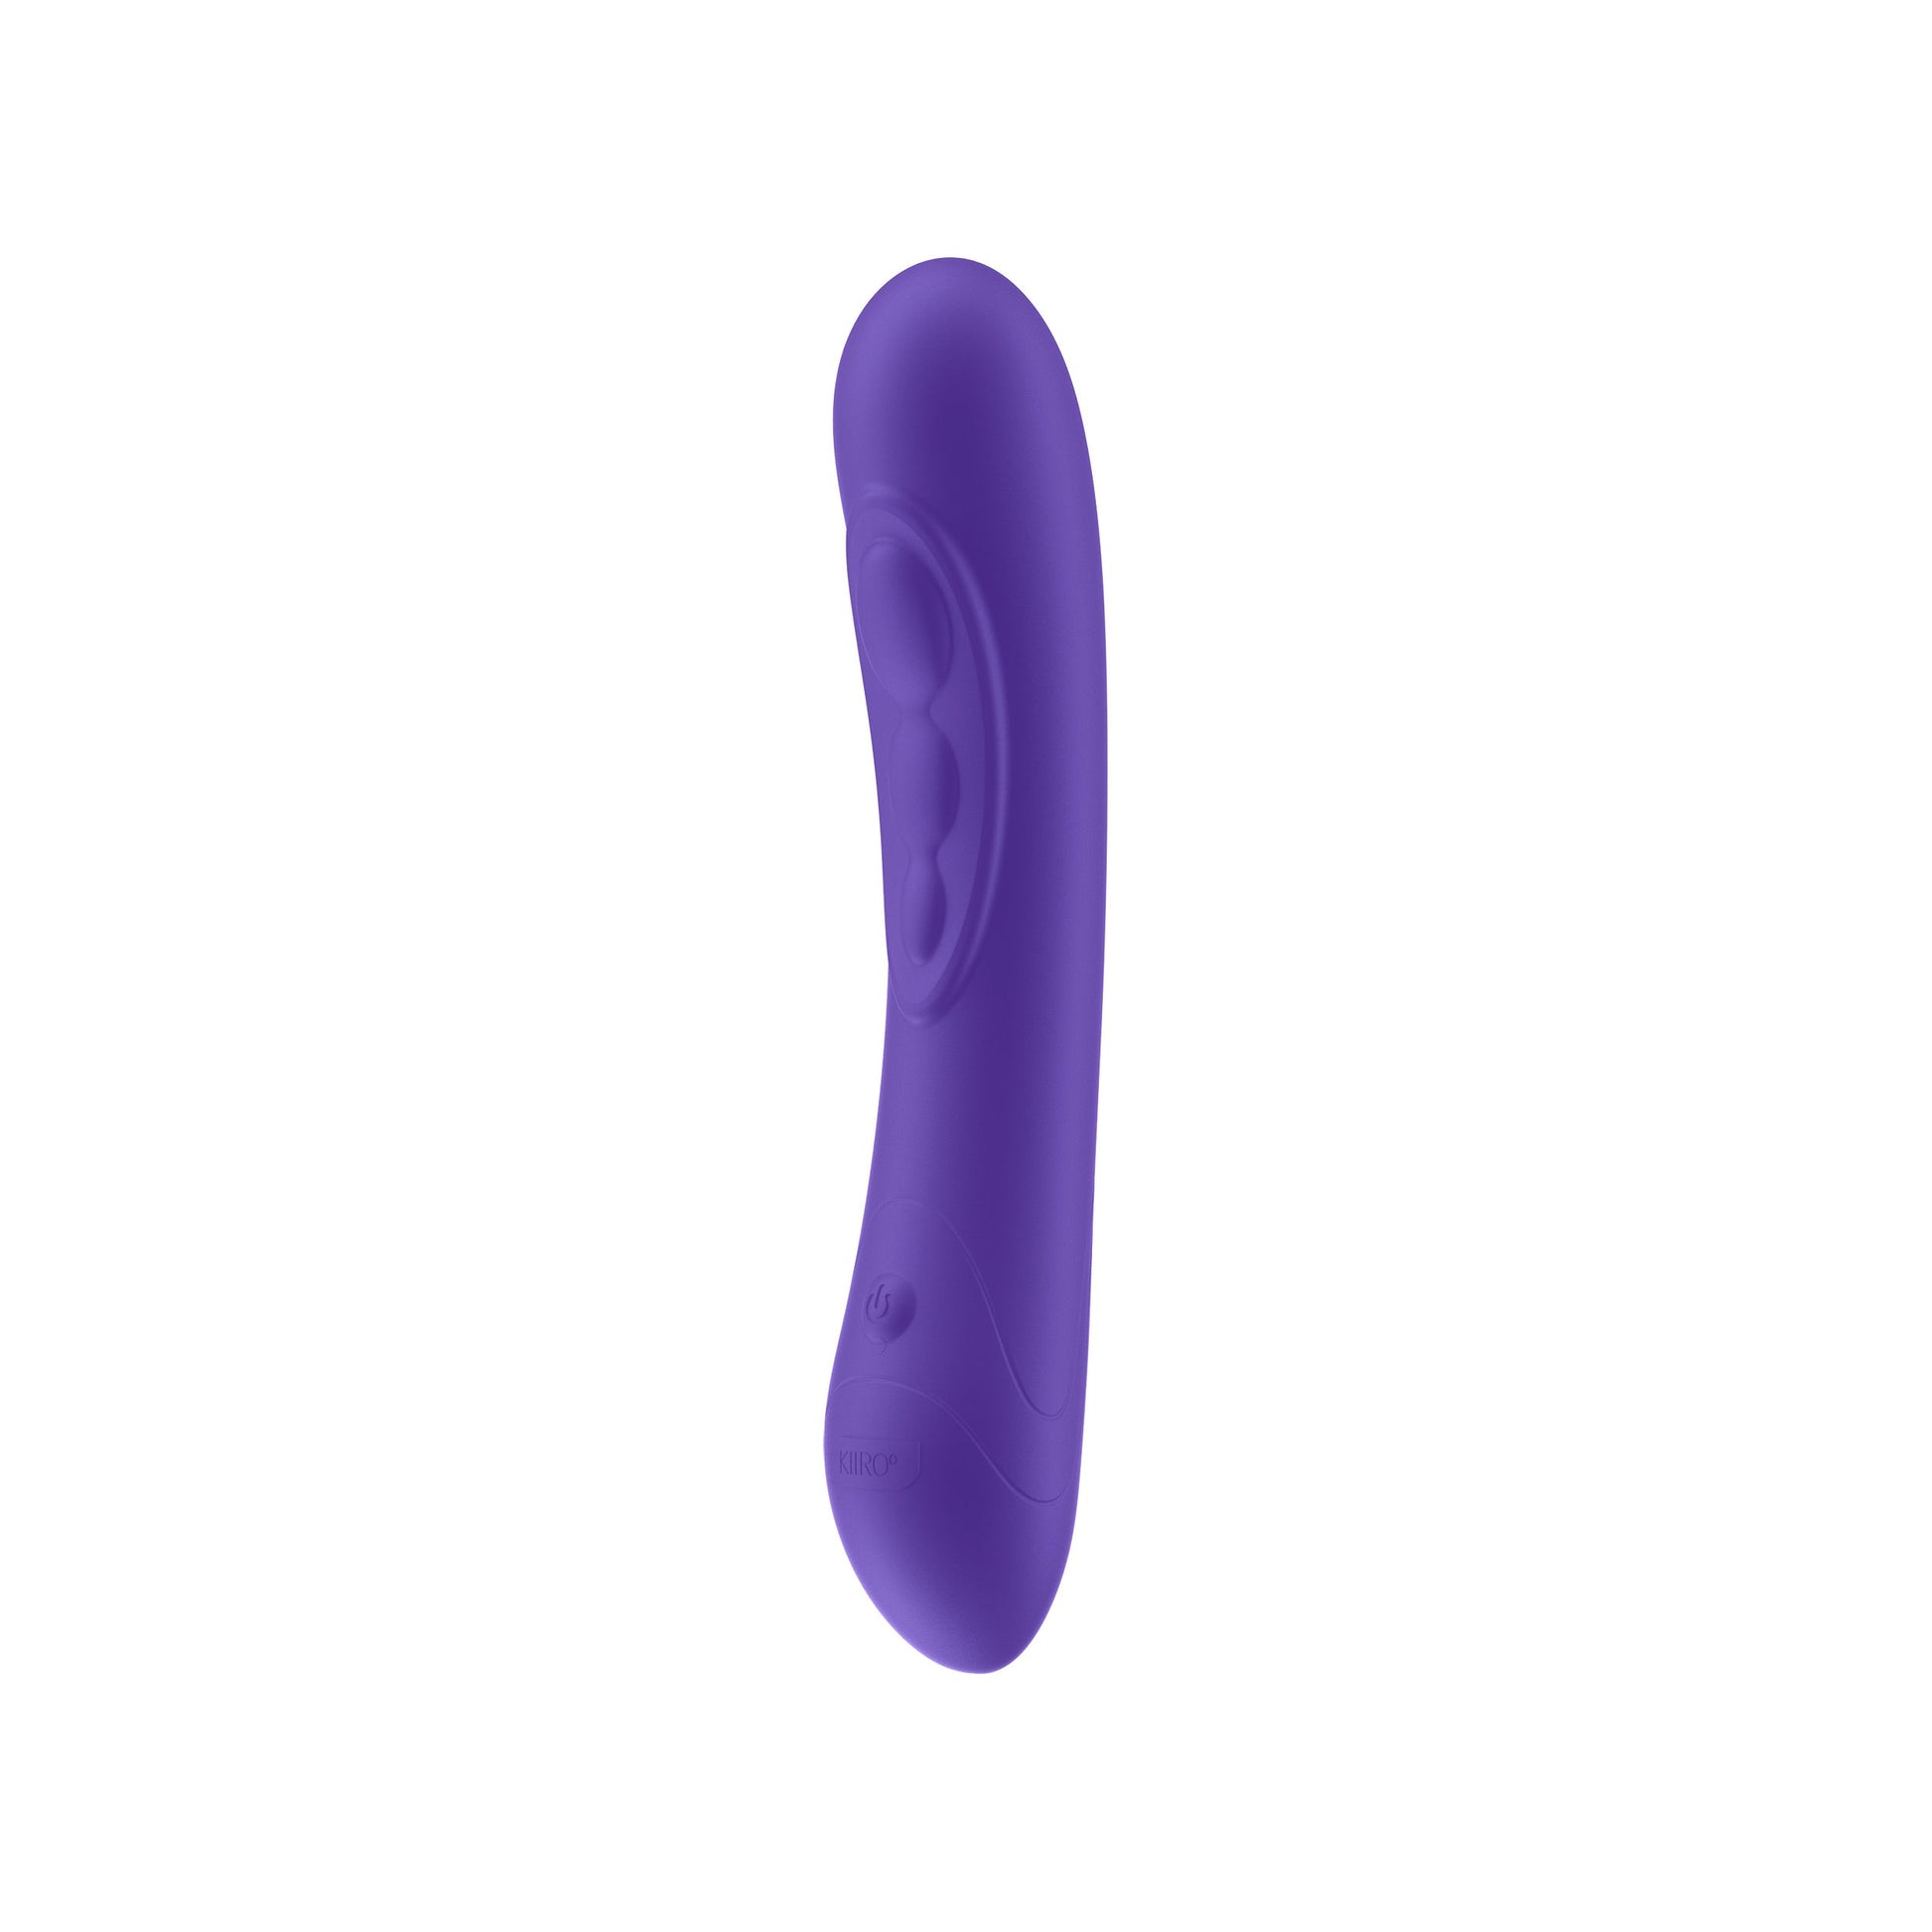 The purple Kiiroo Pearl3 G-Spot Vibrator.